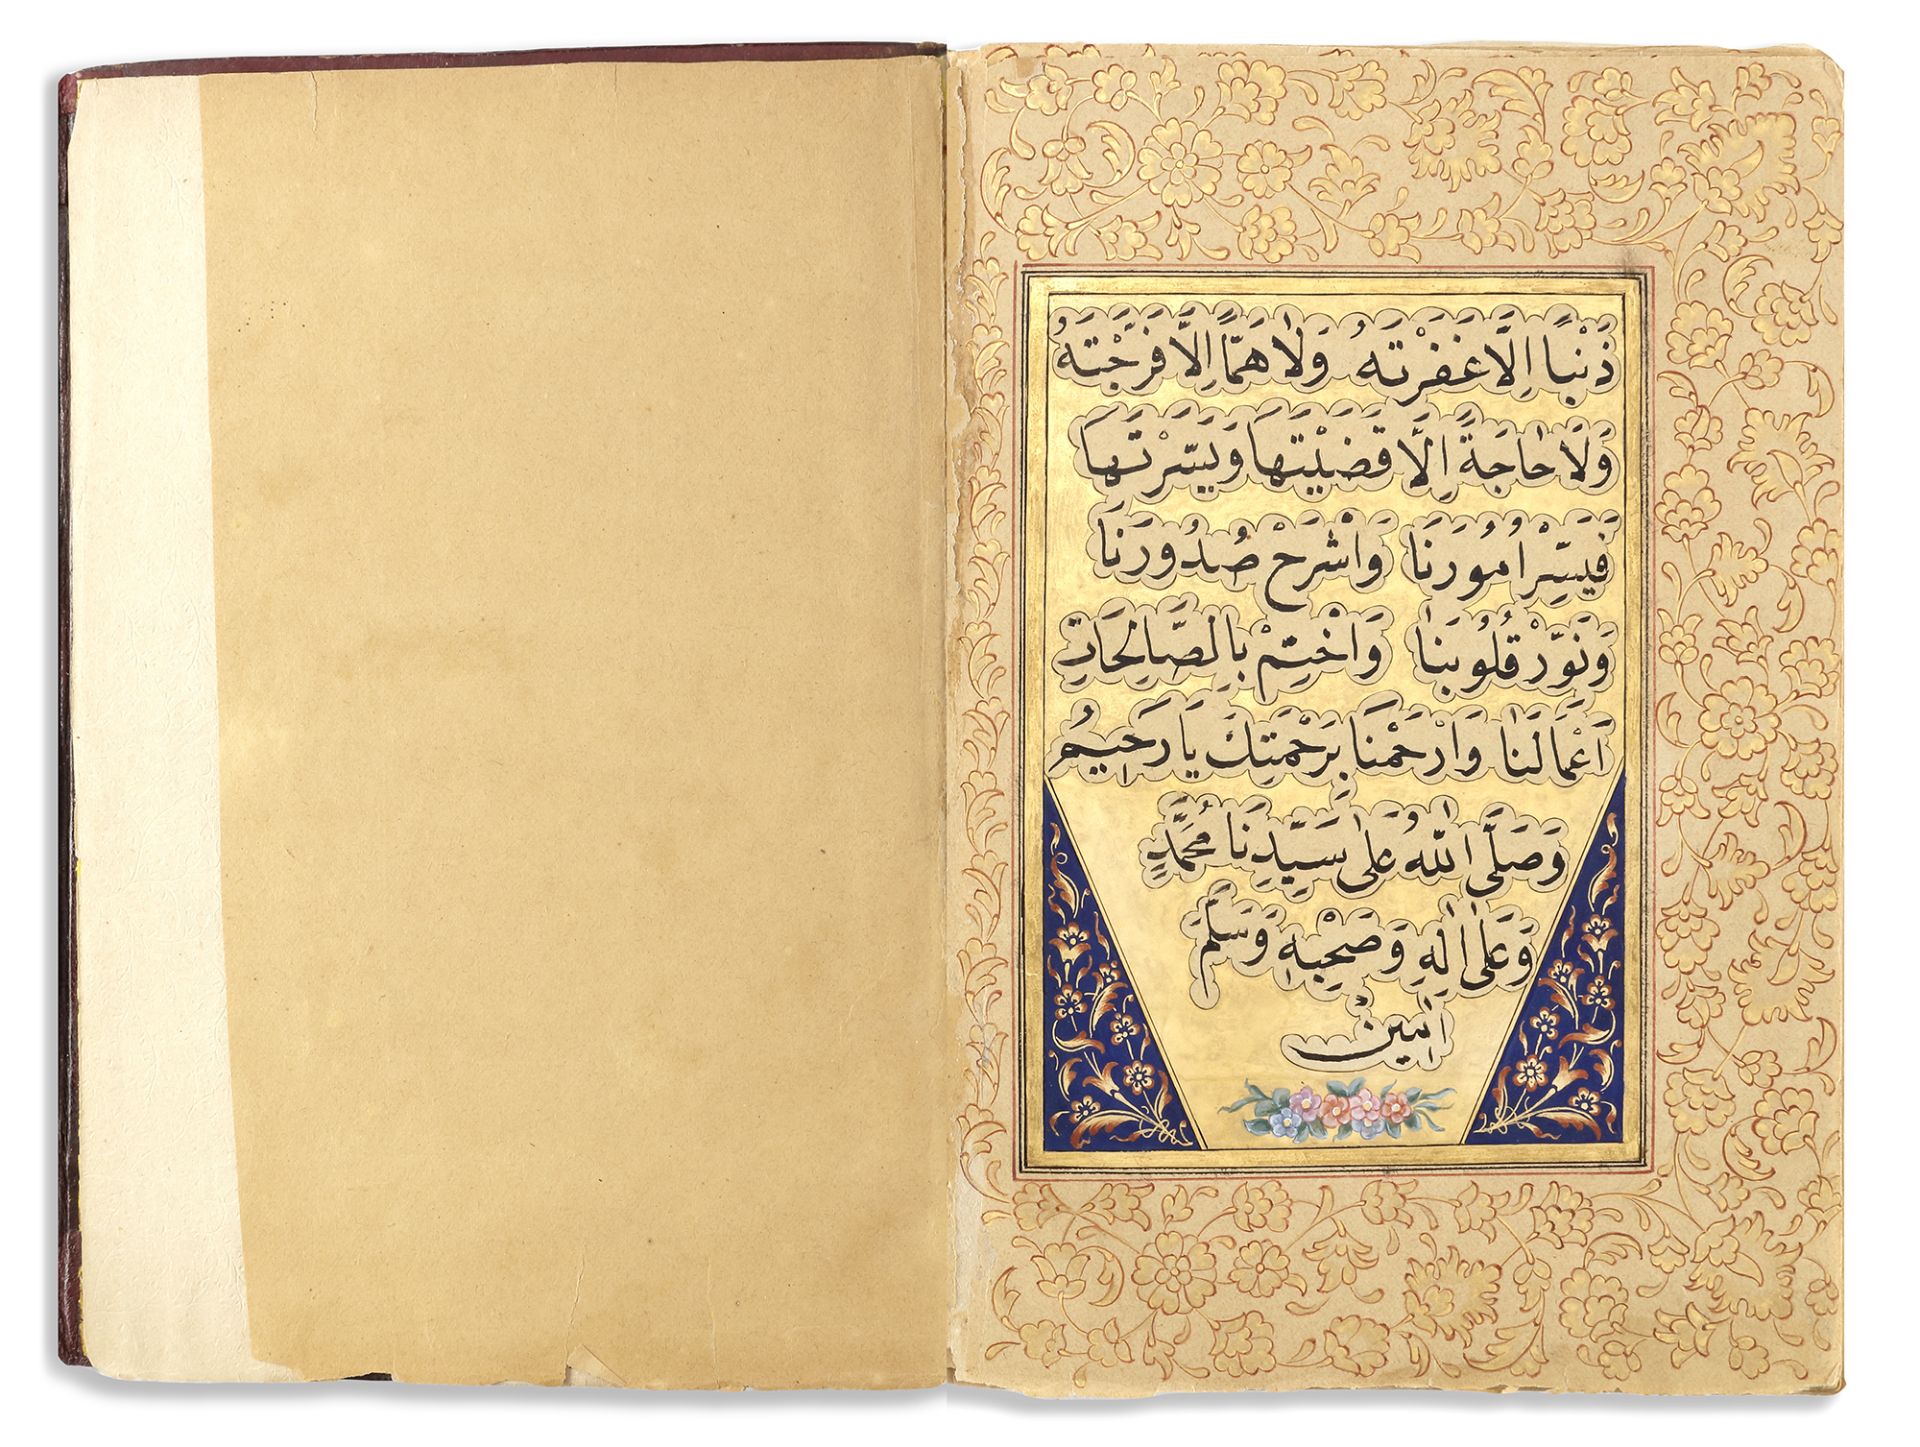 AN ILLUMINATED OTTOMAN AN'AM SHARIF BY ZAHIDE SELMA HANIM, TURKEY, DATED 1312 AH/1894 AD - Image 10 of 11